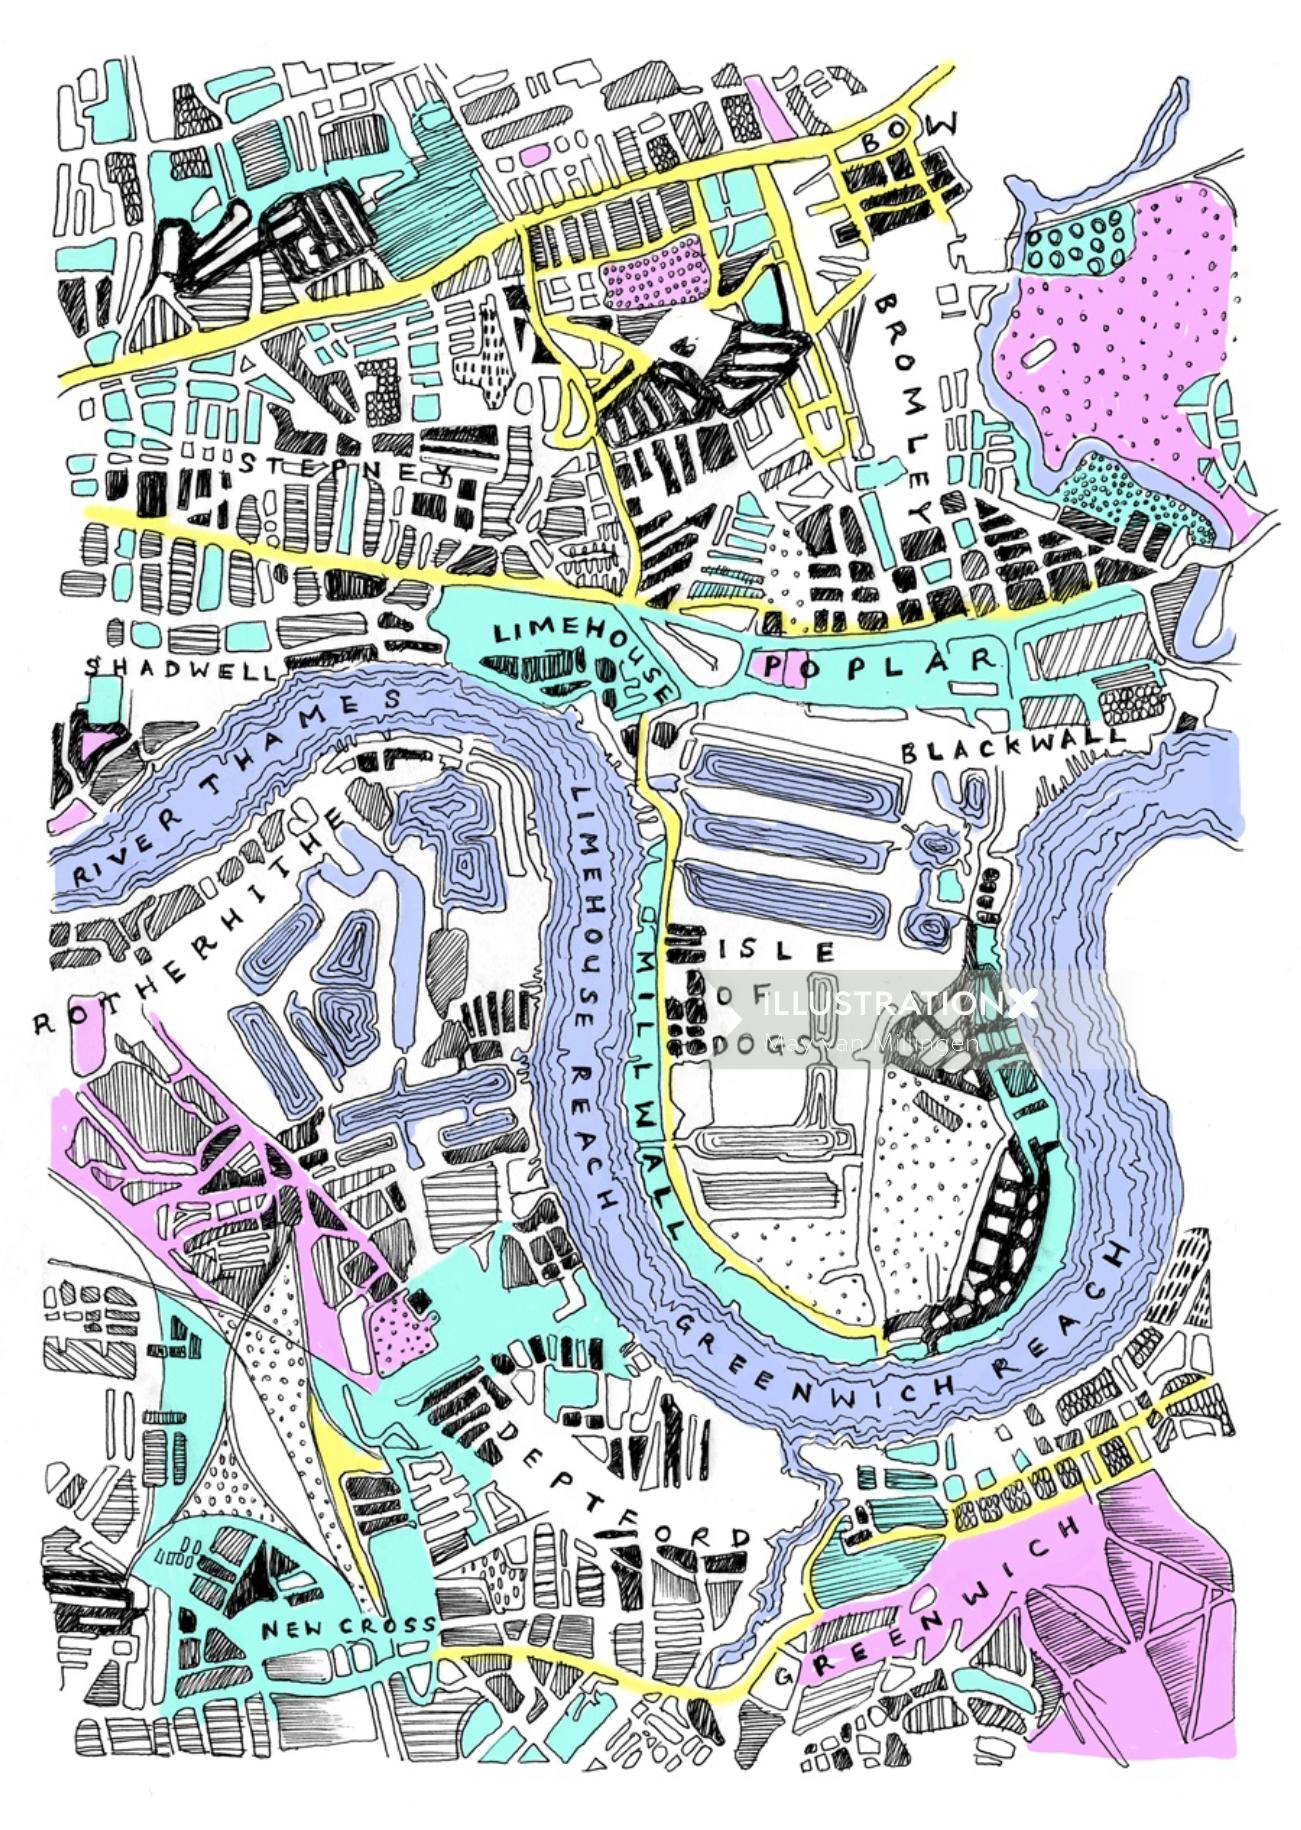 London river flow direction illustration by May van Millingen